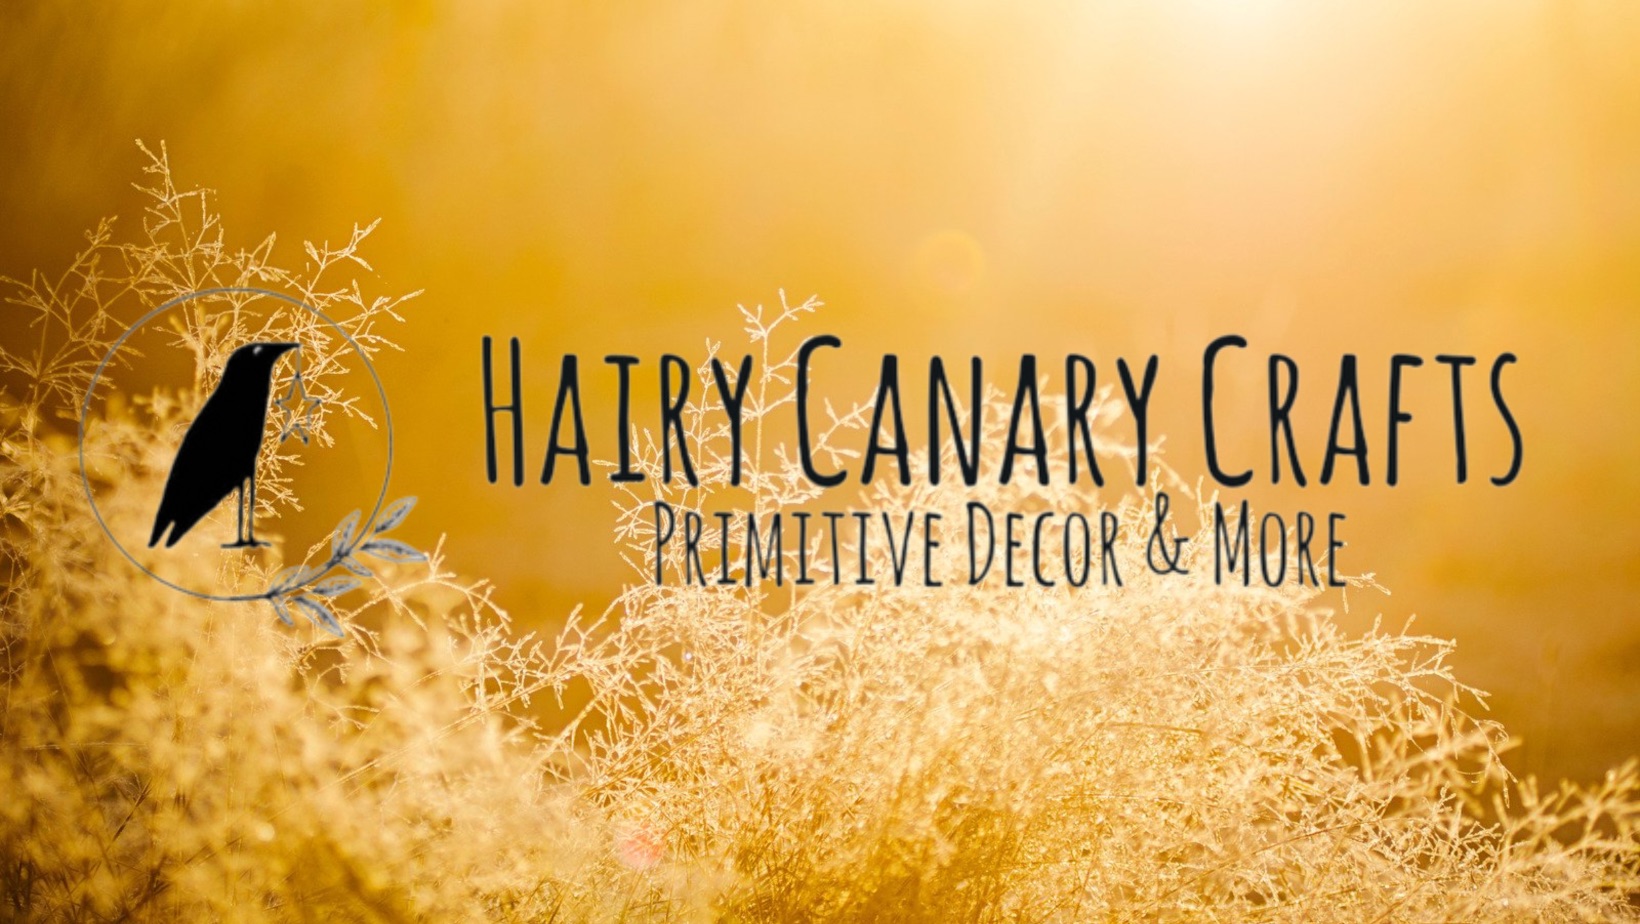 Hairy Canary Crafts & Decor